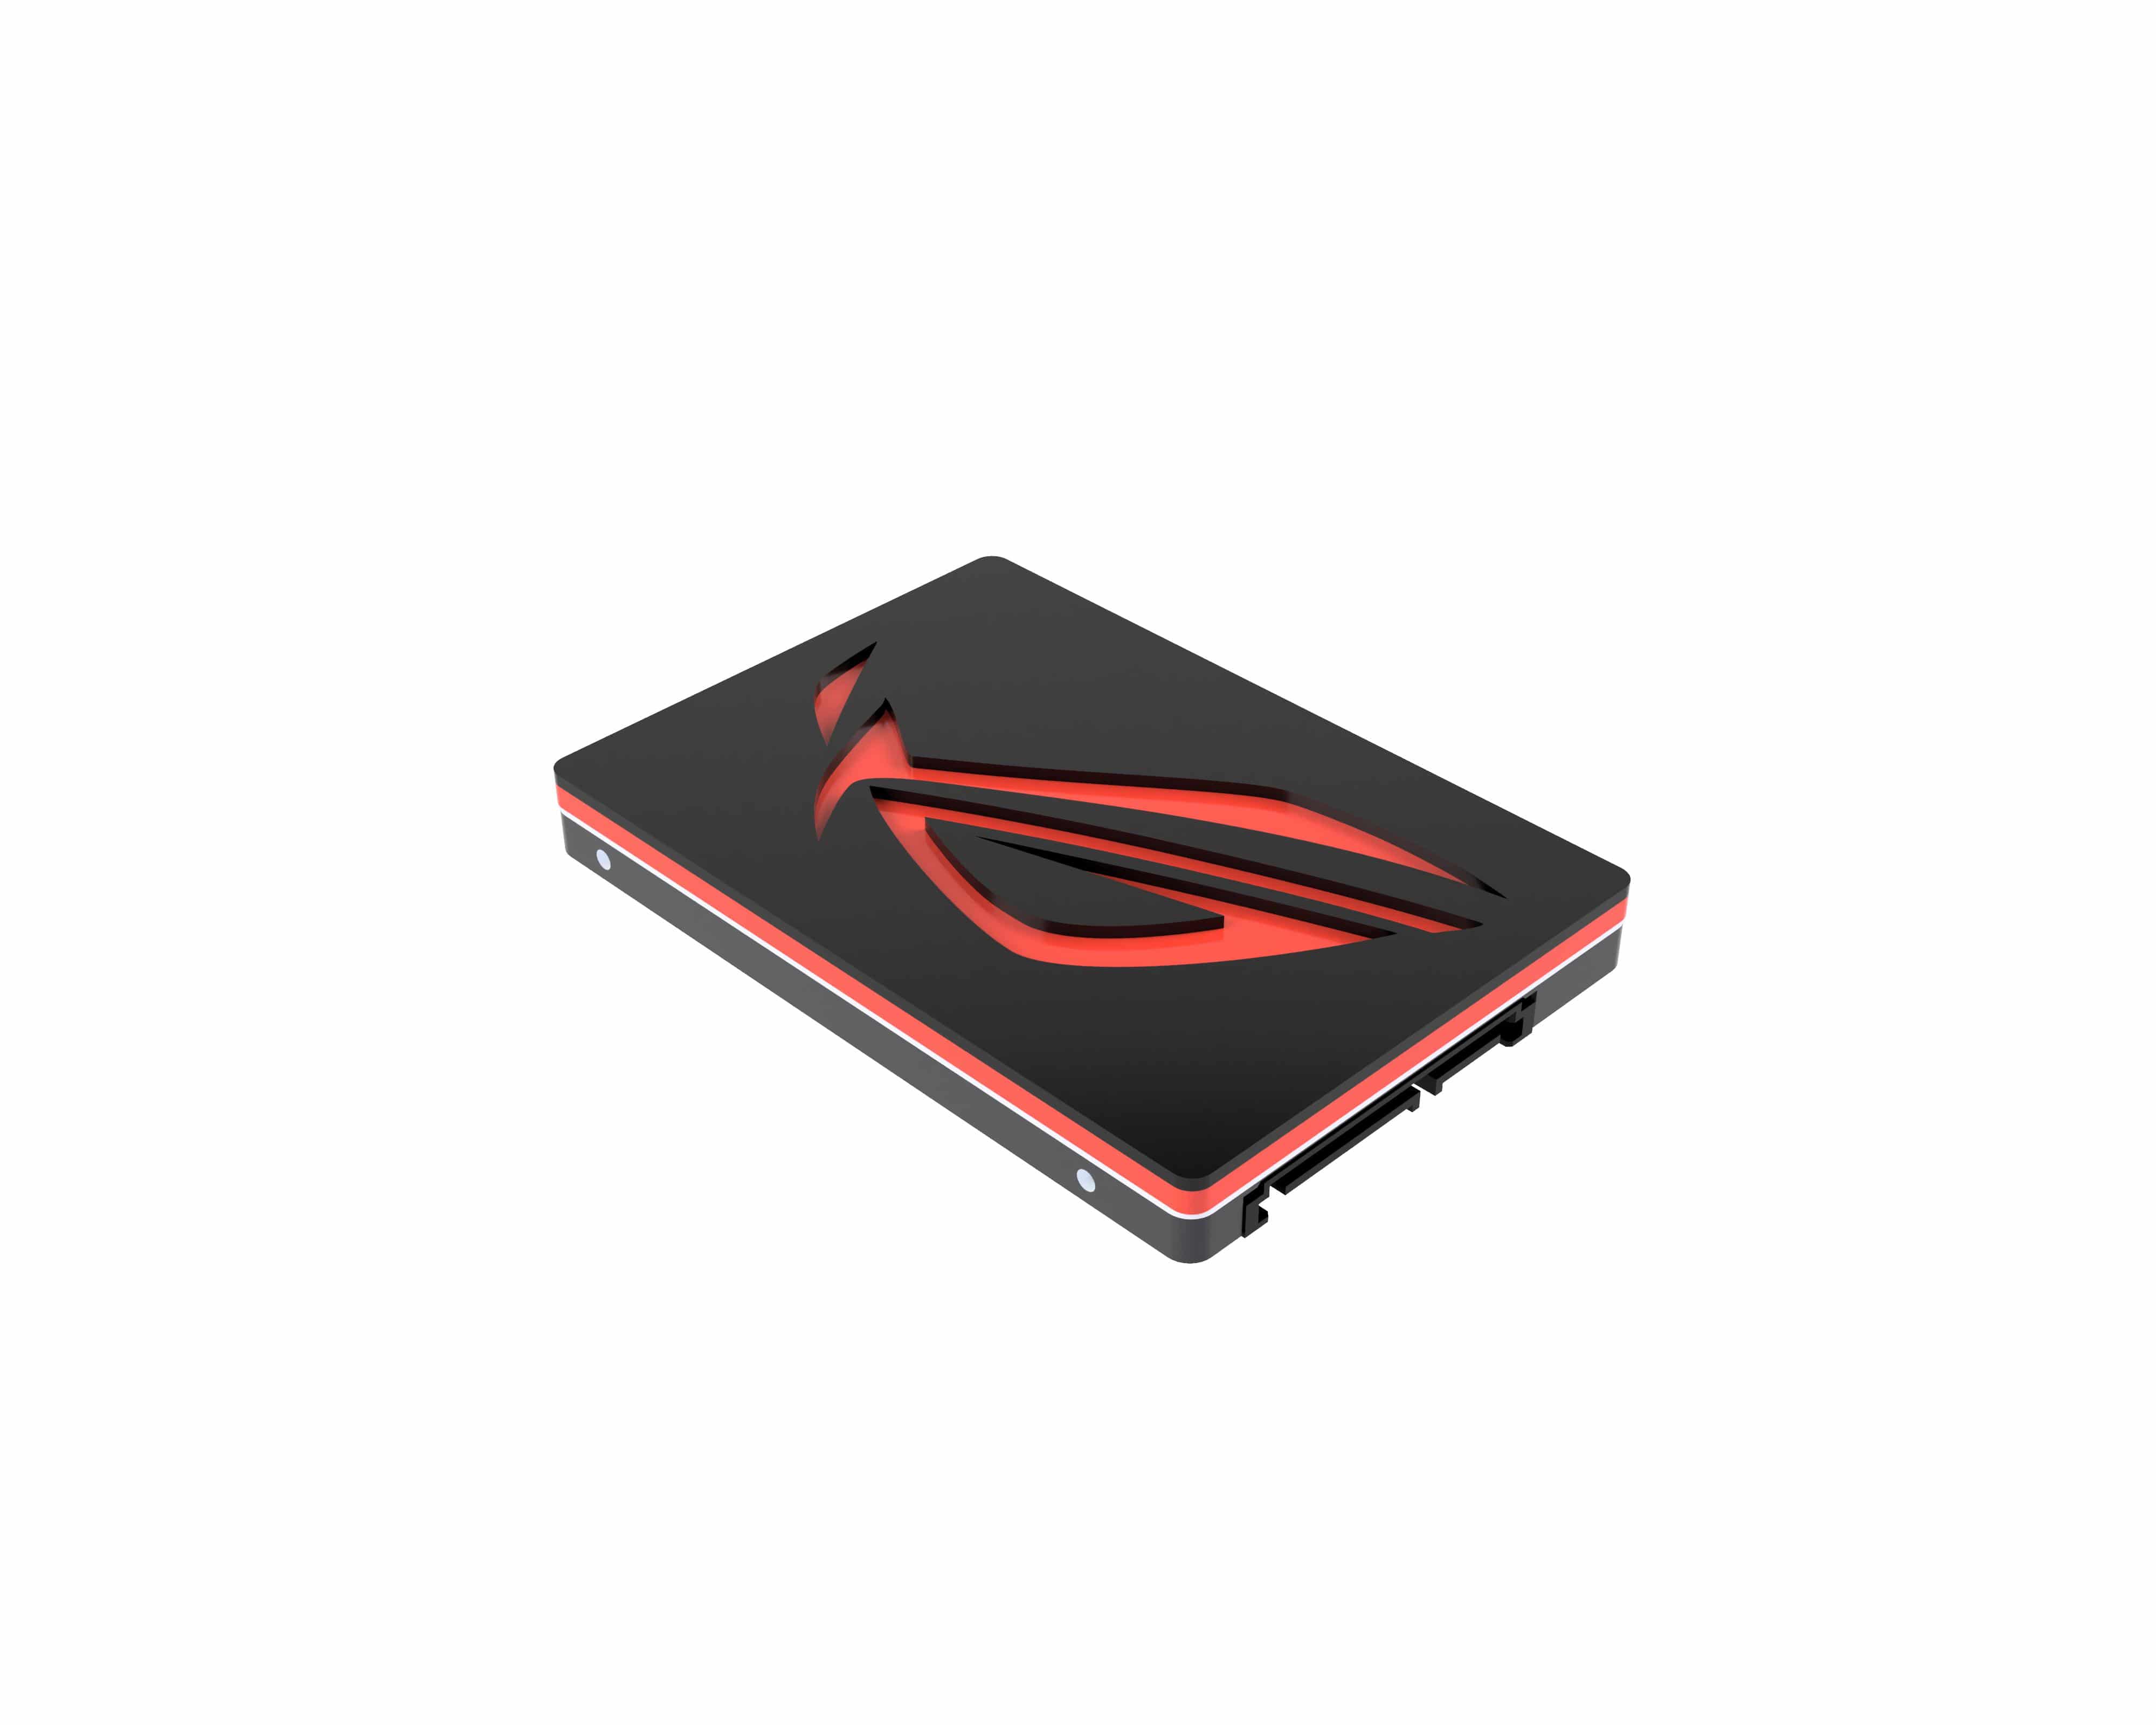 Asus ROG Logo - Asus ROG Logo SSD HDD Cover Or Puck Choose Any Color!